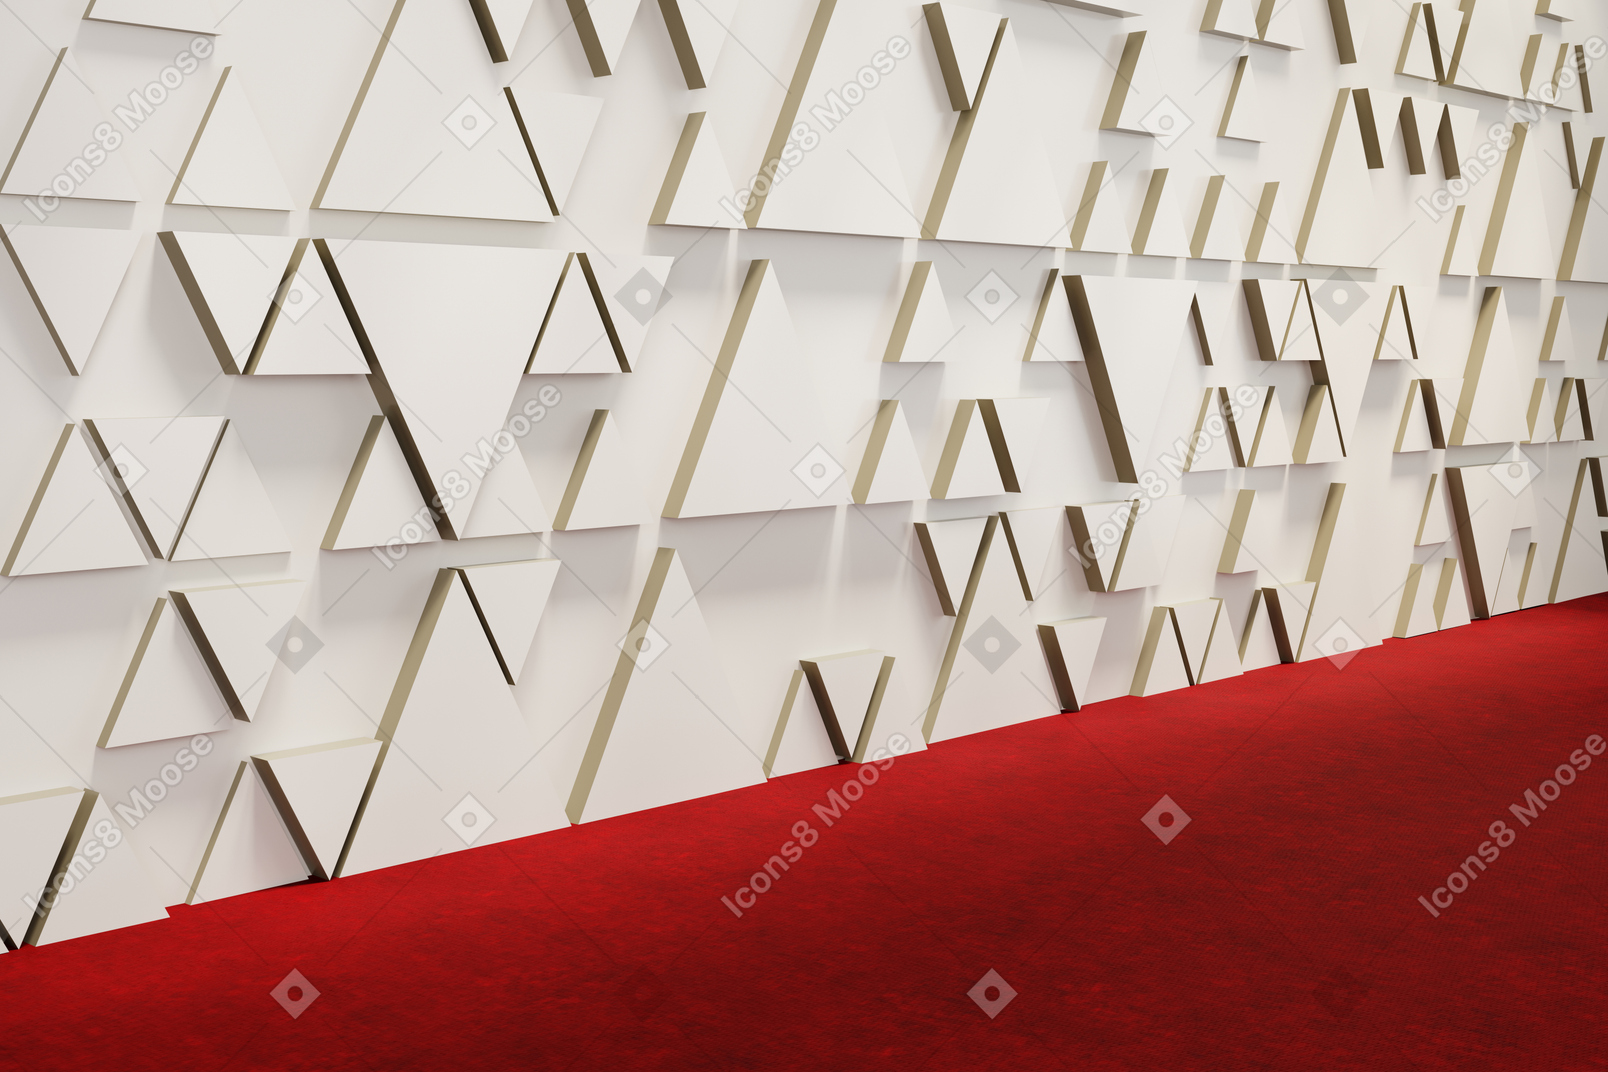 Red carpet at academy award